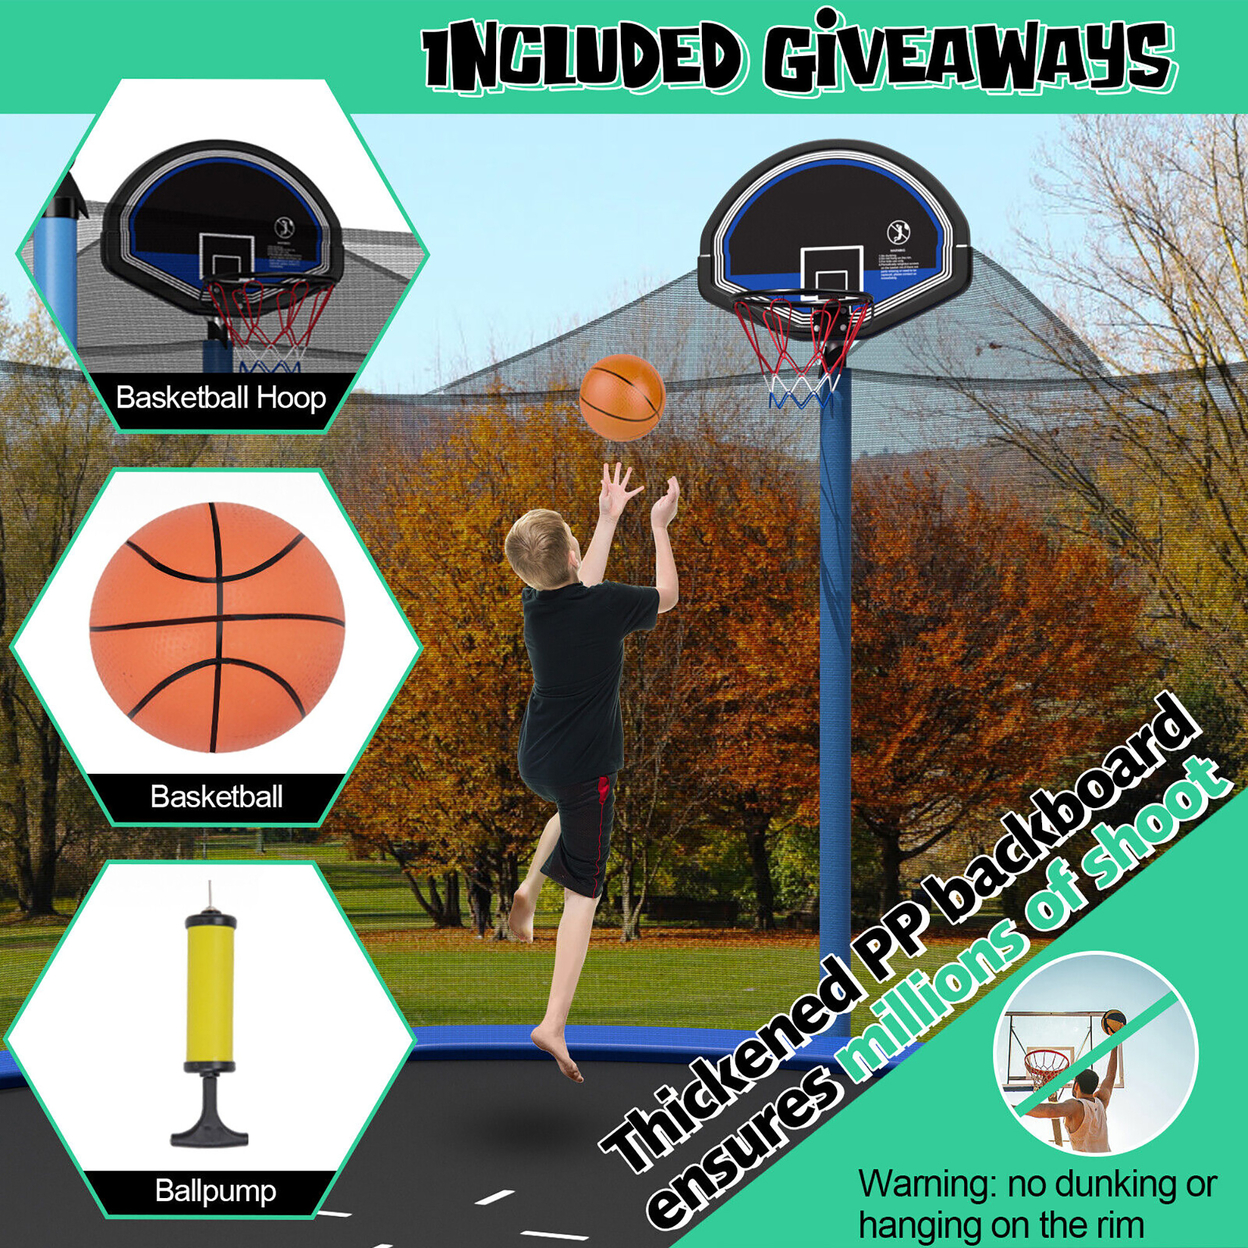 12/14/15/16FT Recreational Trampoline W/ Inner Enclosure Net Basketball Hoop Ladder ASTM - 16ft